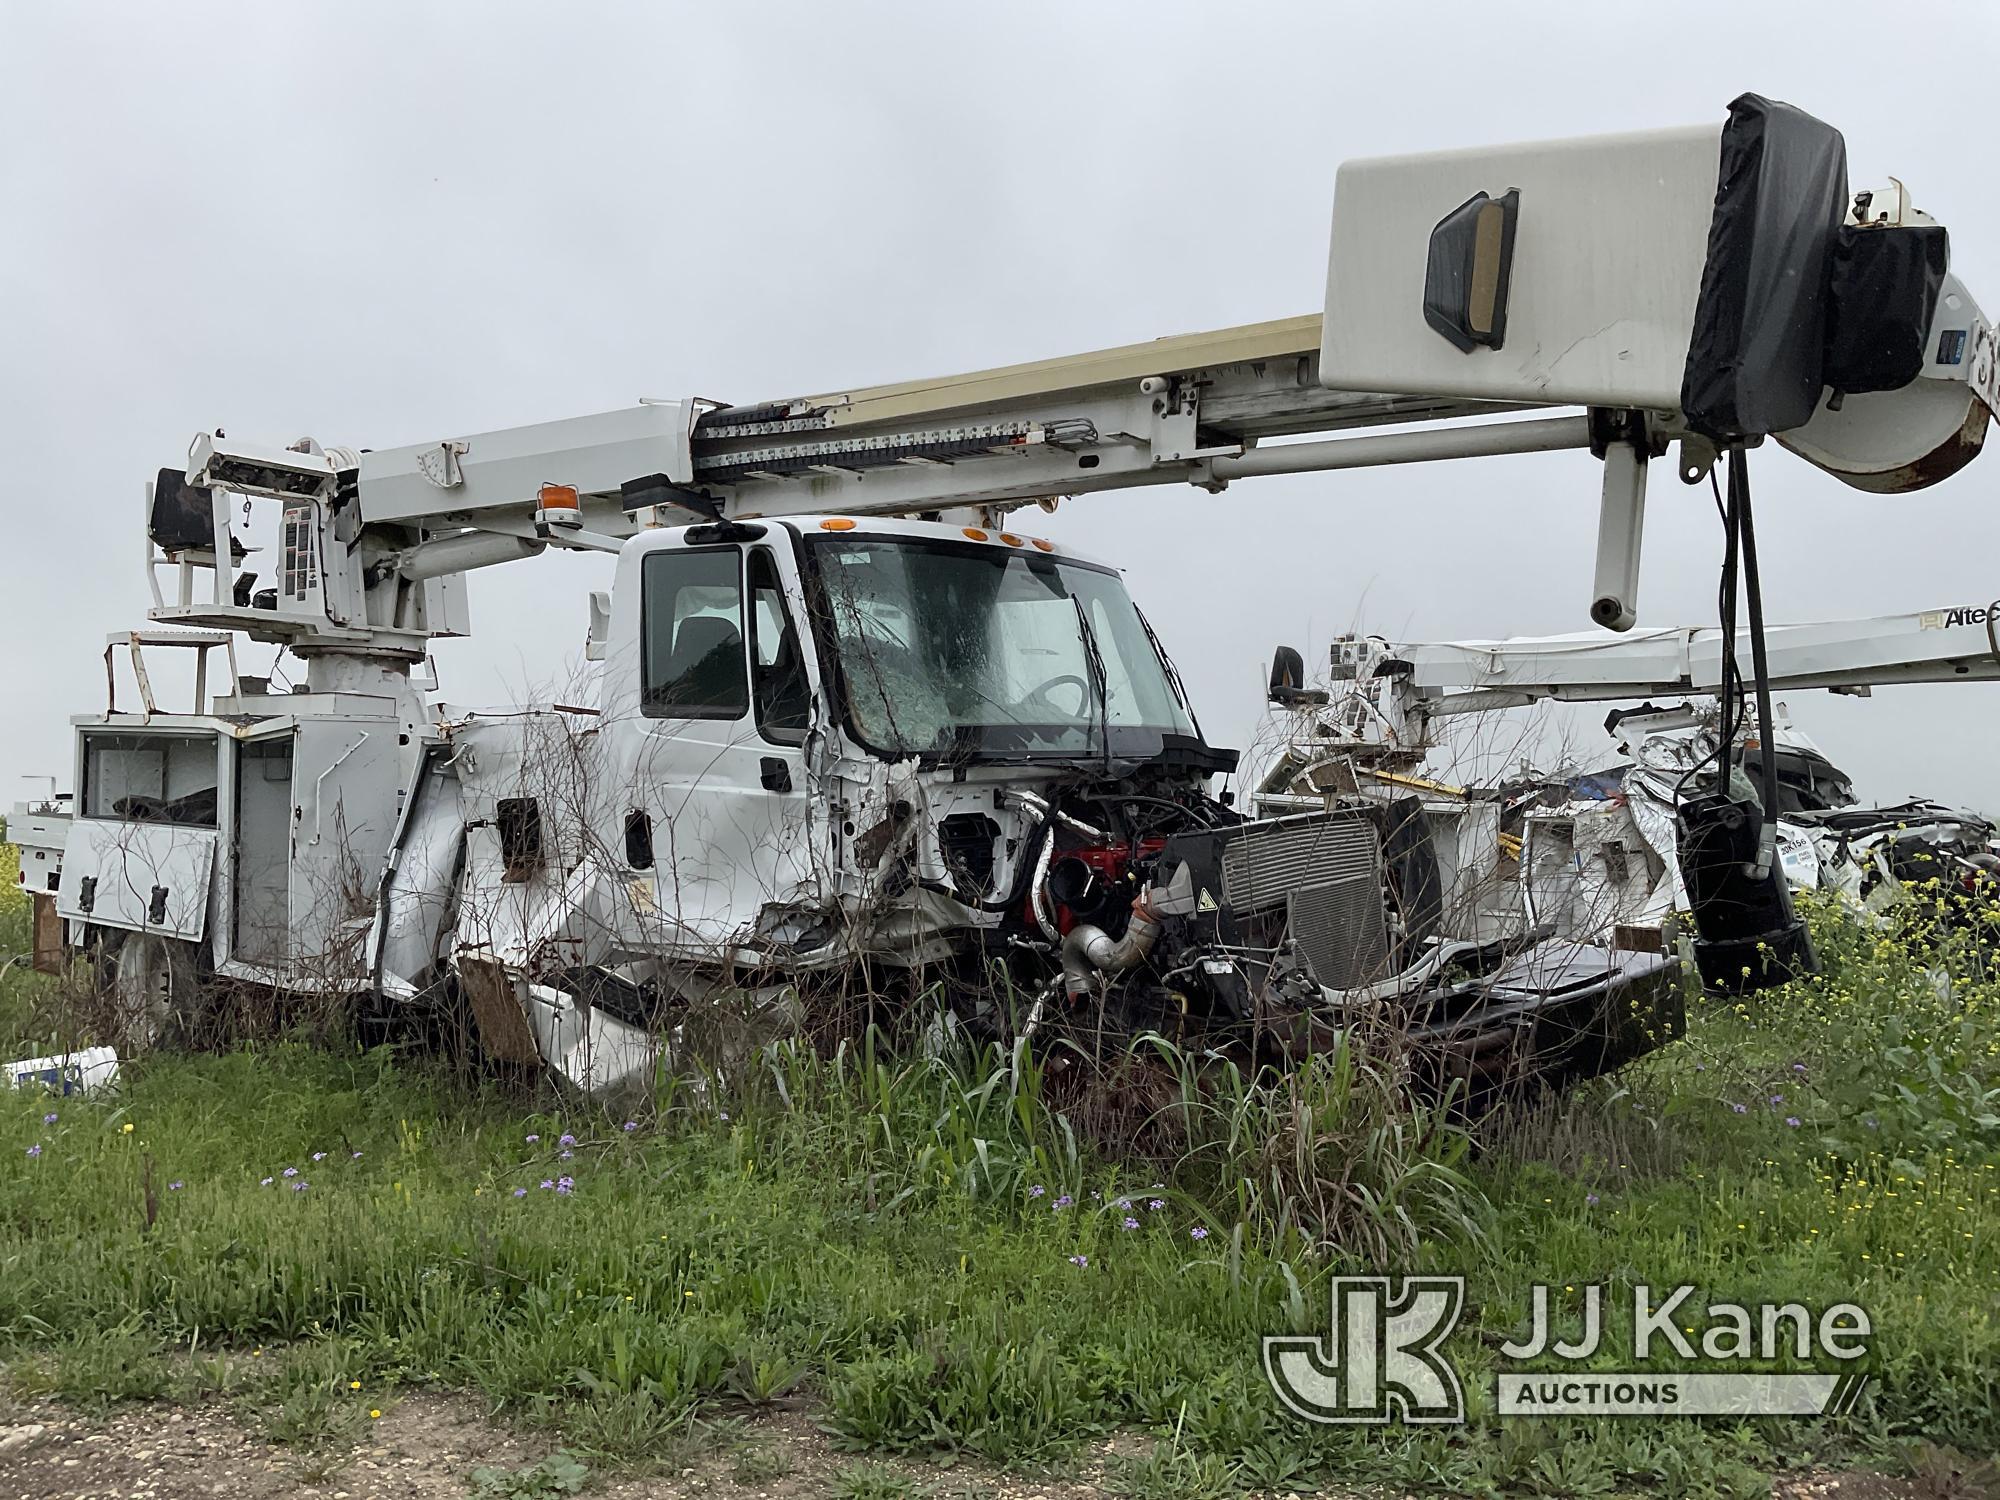 (Creedmoor, TX) Altec DM47-TR, Digger Derrick rear mounted on 2017 International 4300 Utility Truck